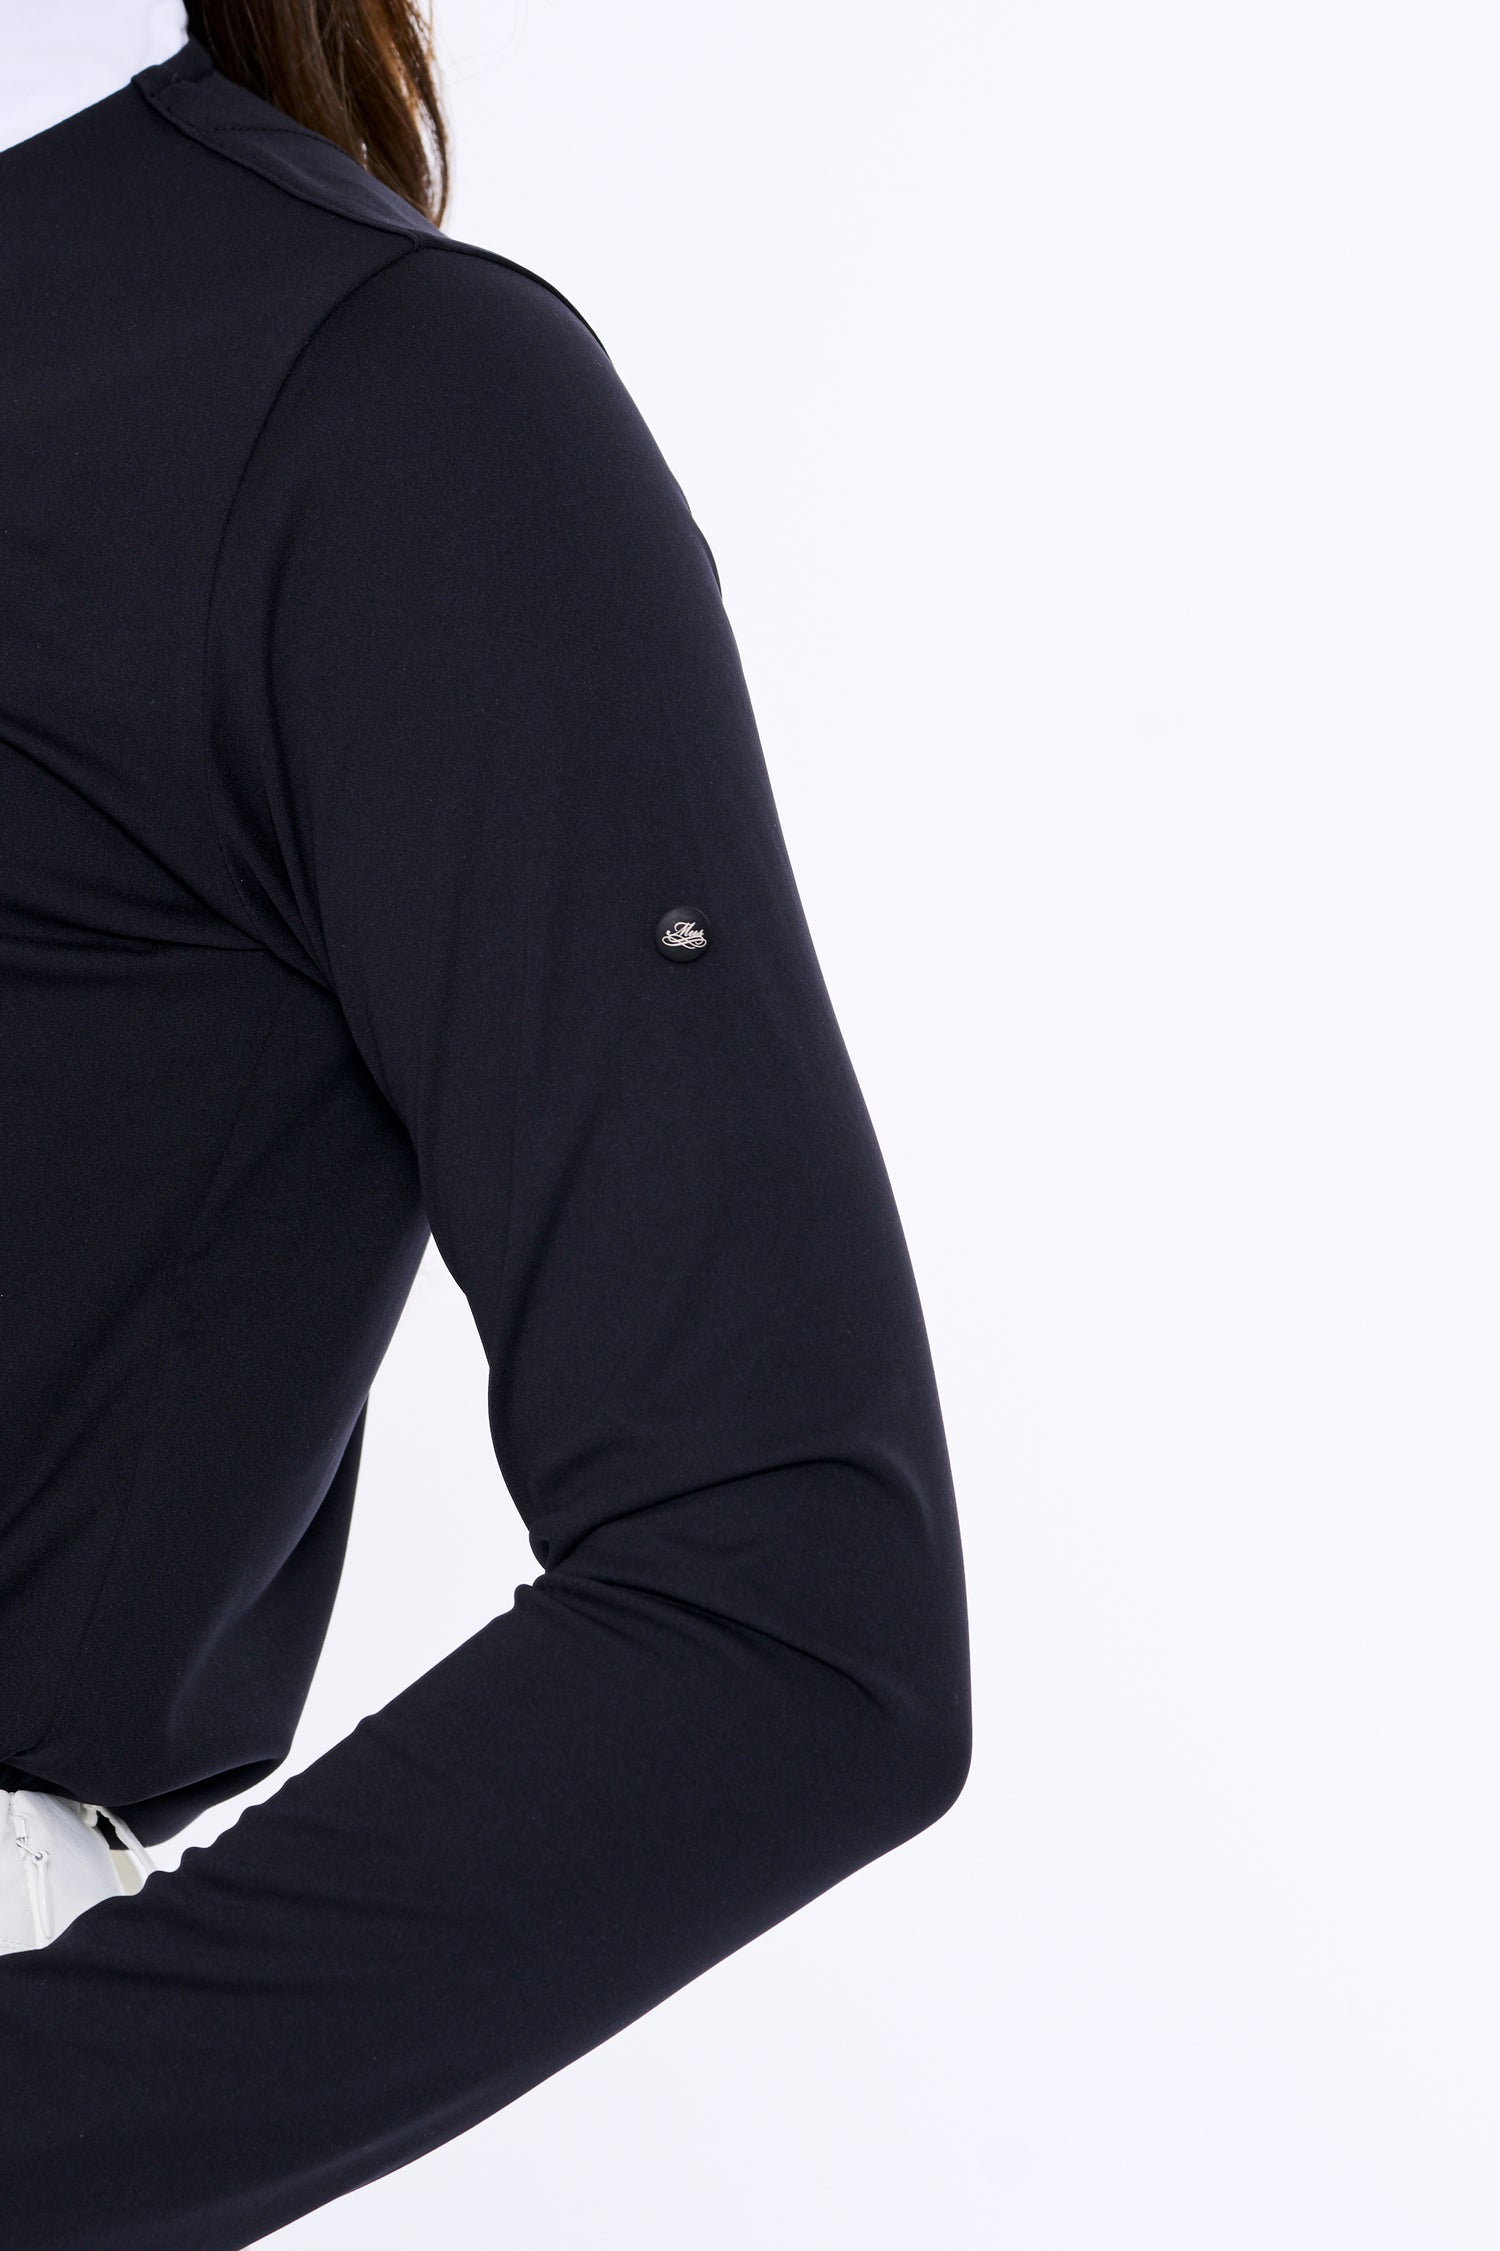 Cleric zip-up long sleeve shirt (701H2408)